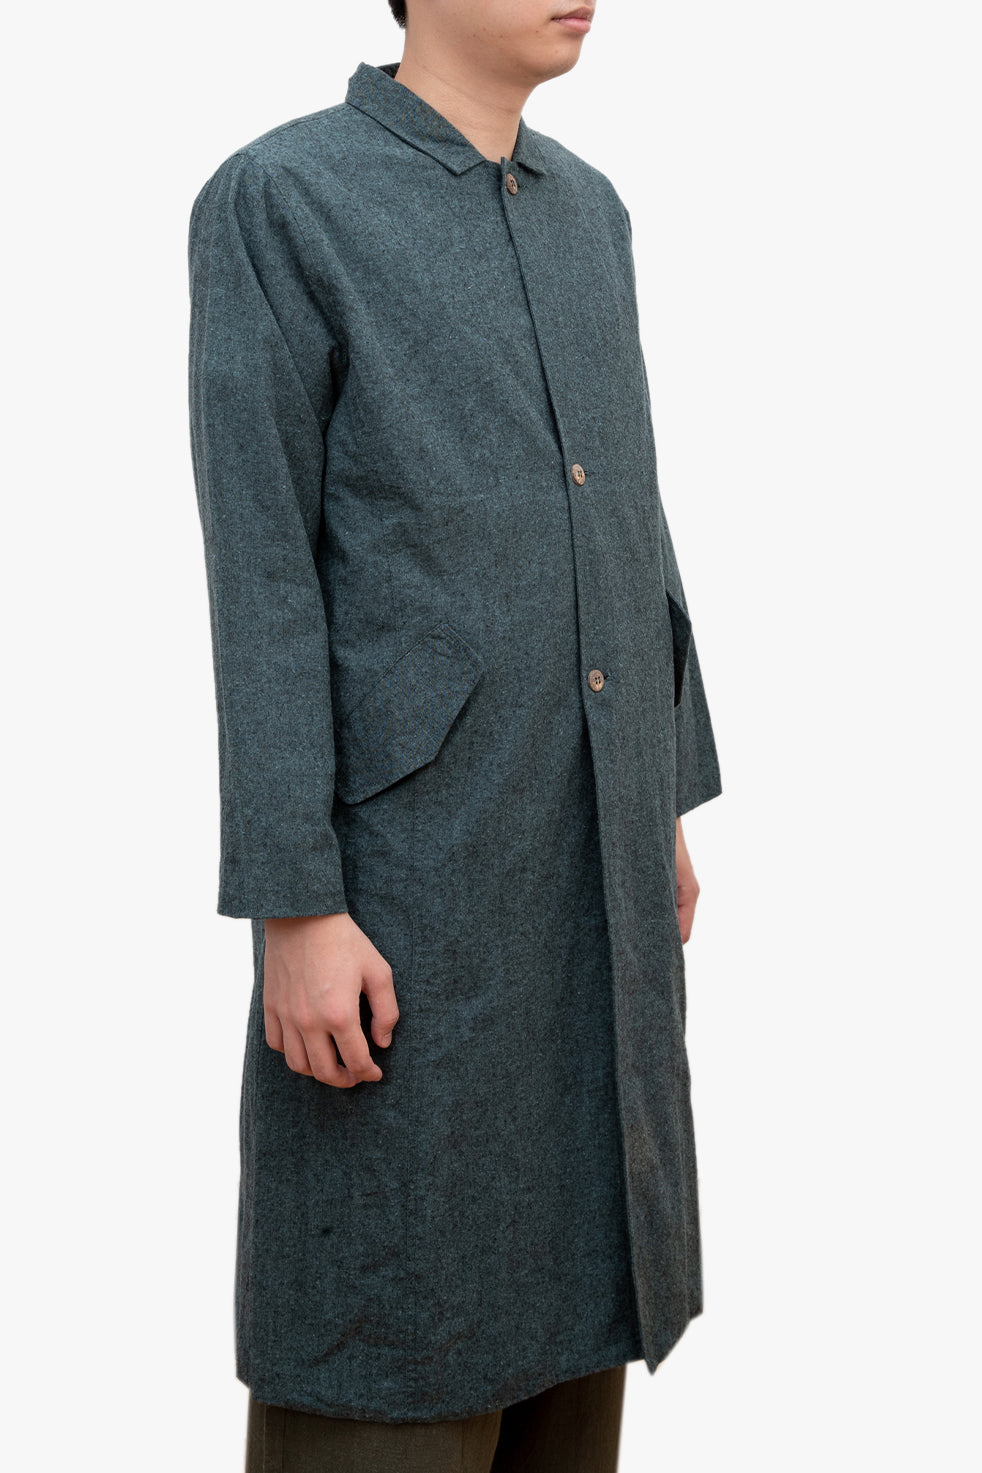 Le BAIKEN long coat with pocket